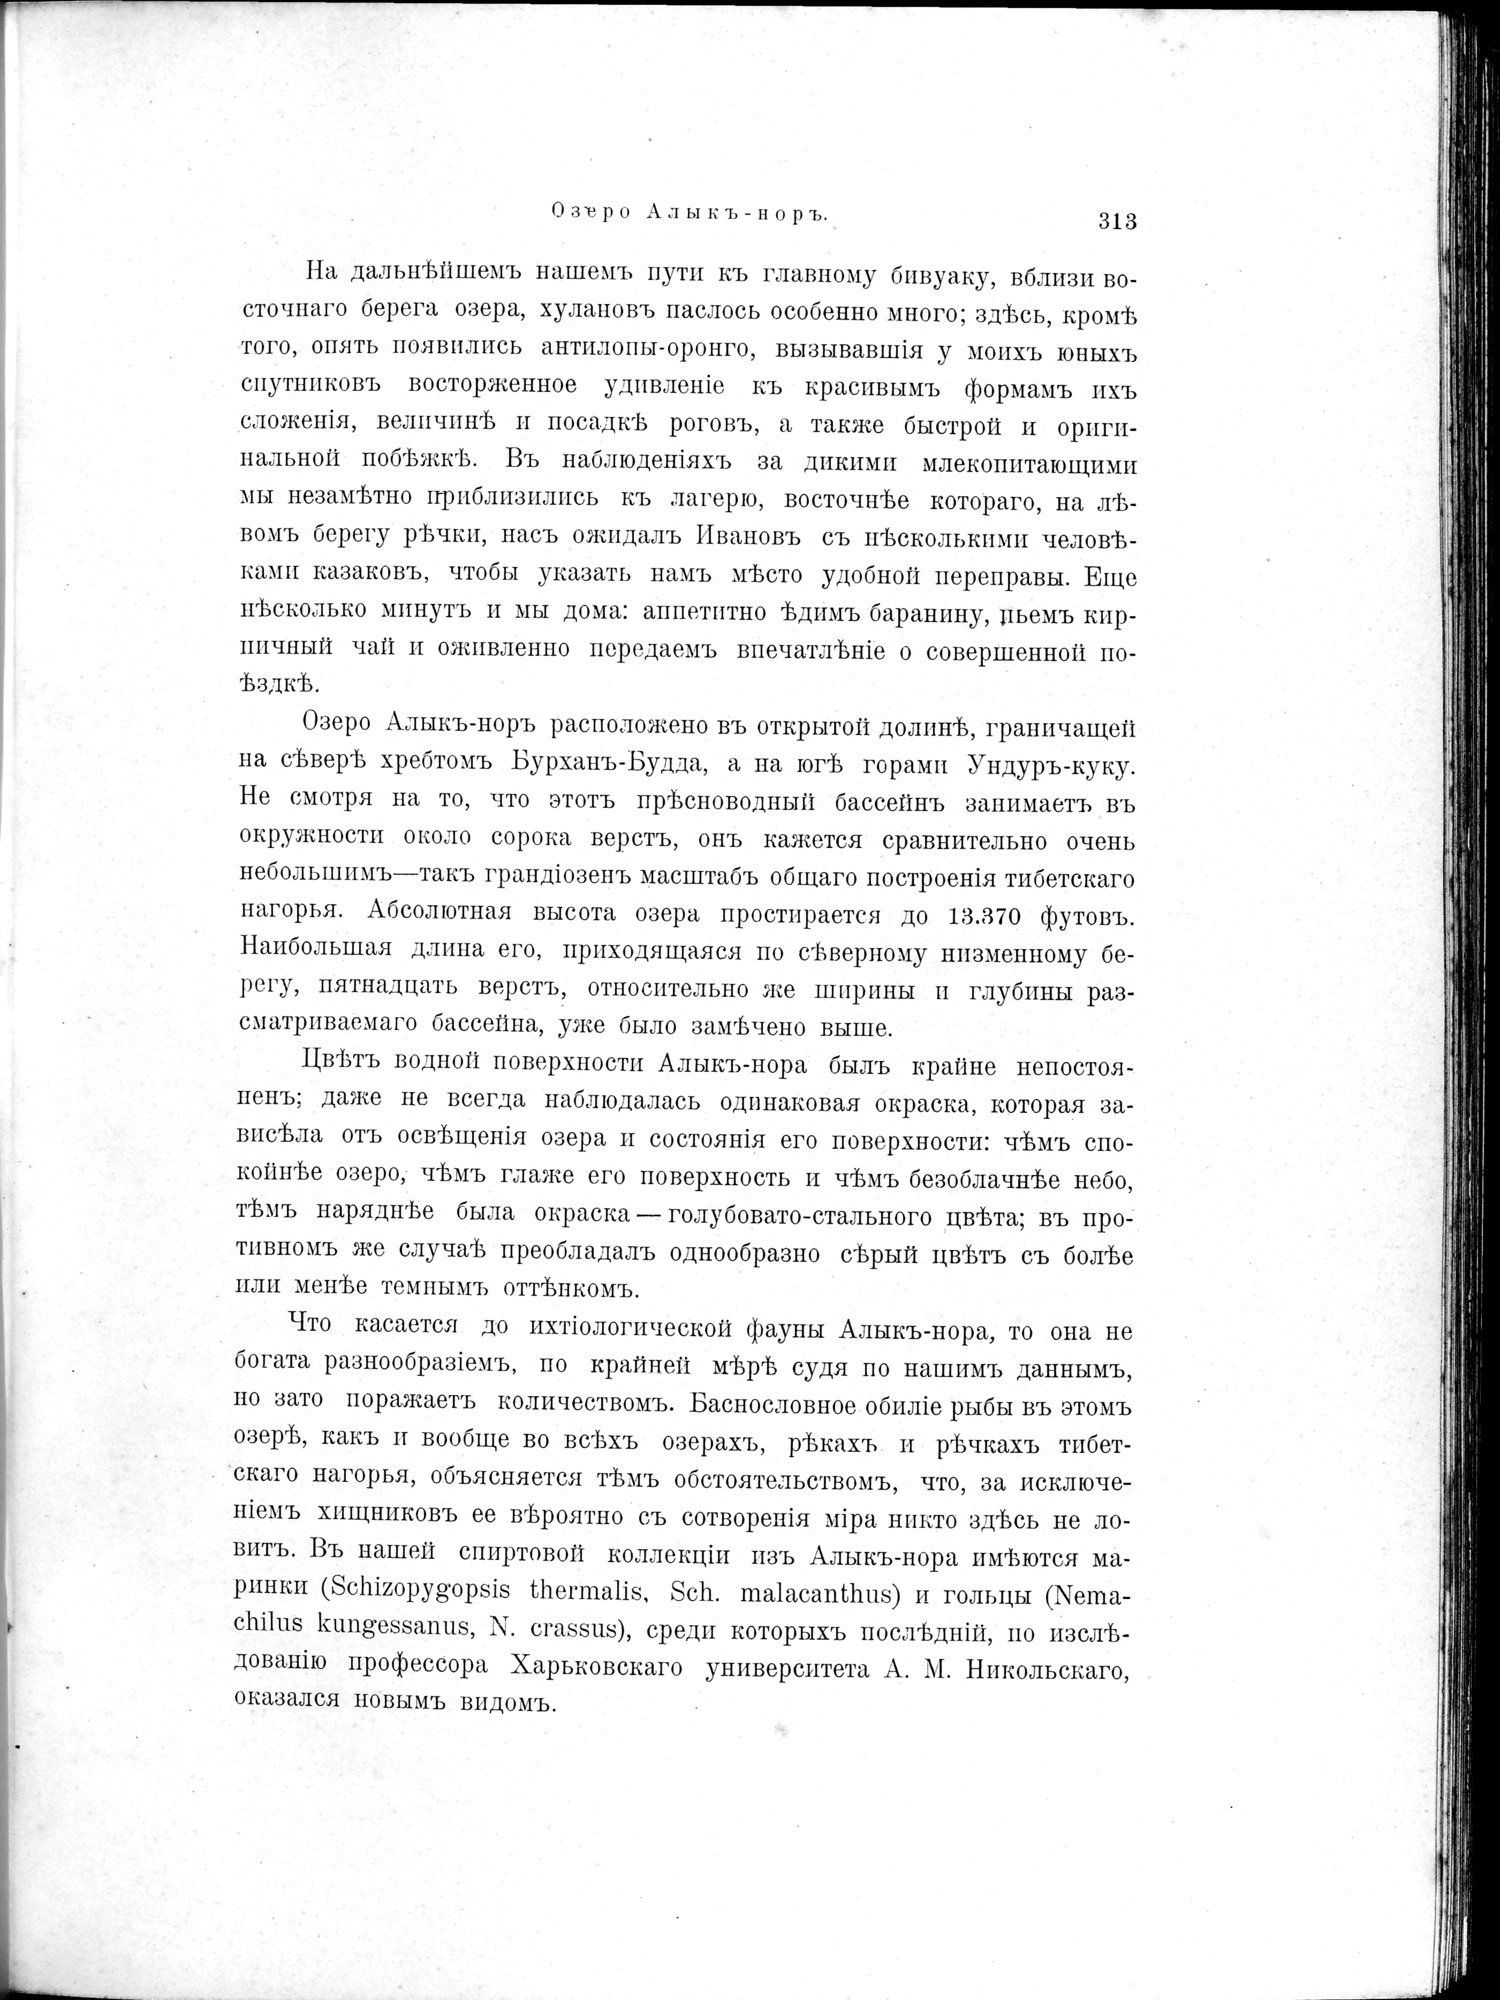 Mongoliia i Kam : vol.2 / Page 81 (Grayscale High Resolution Image)